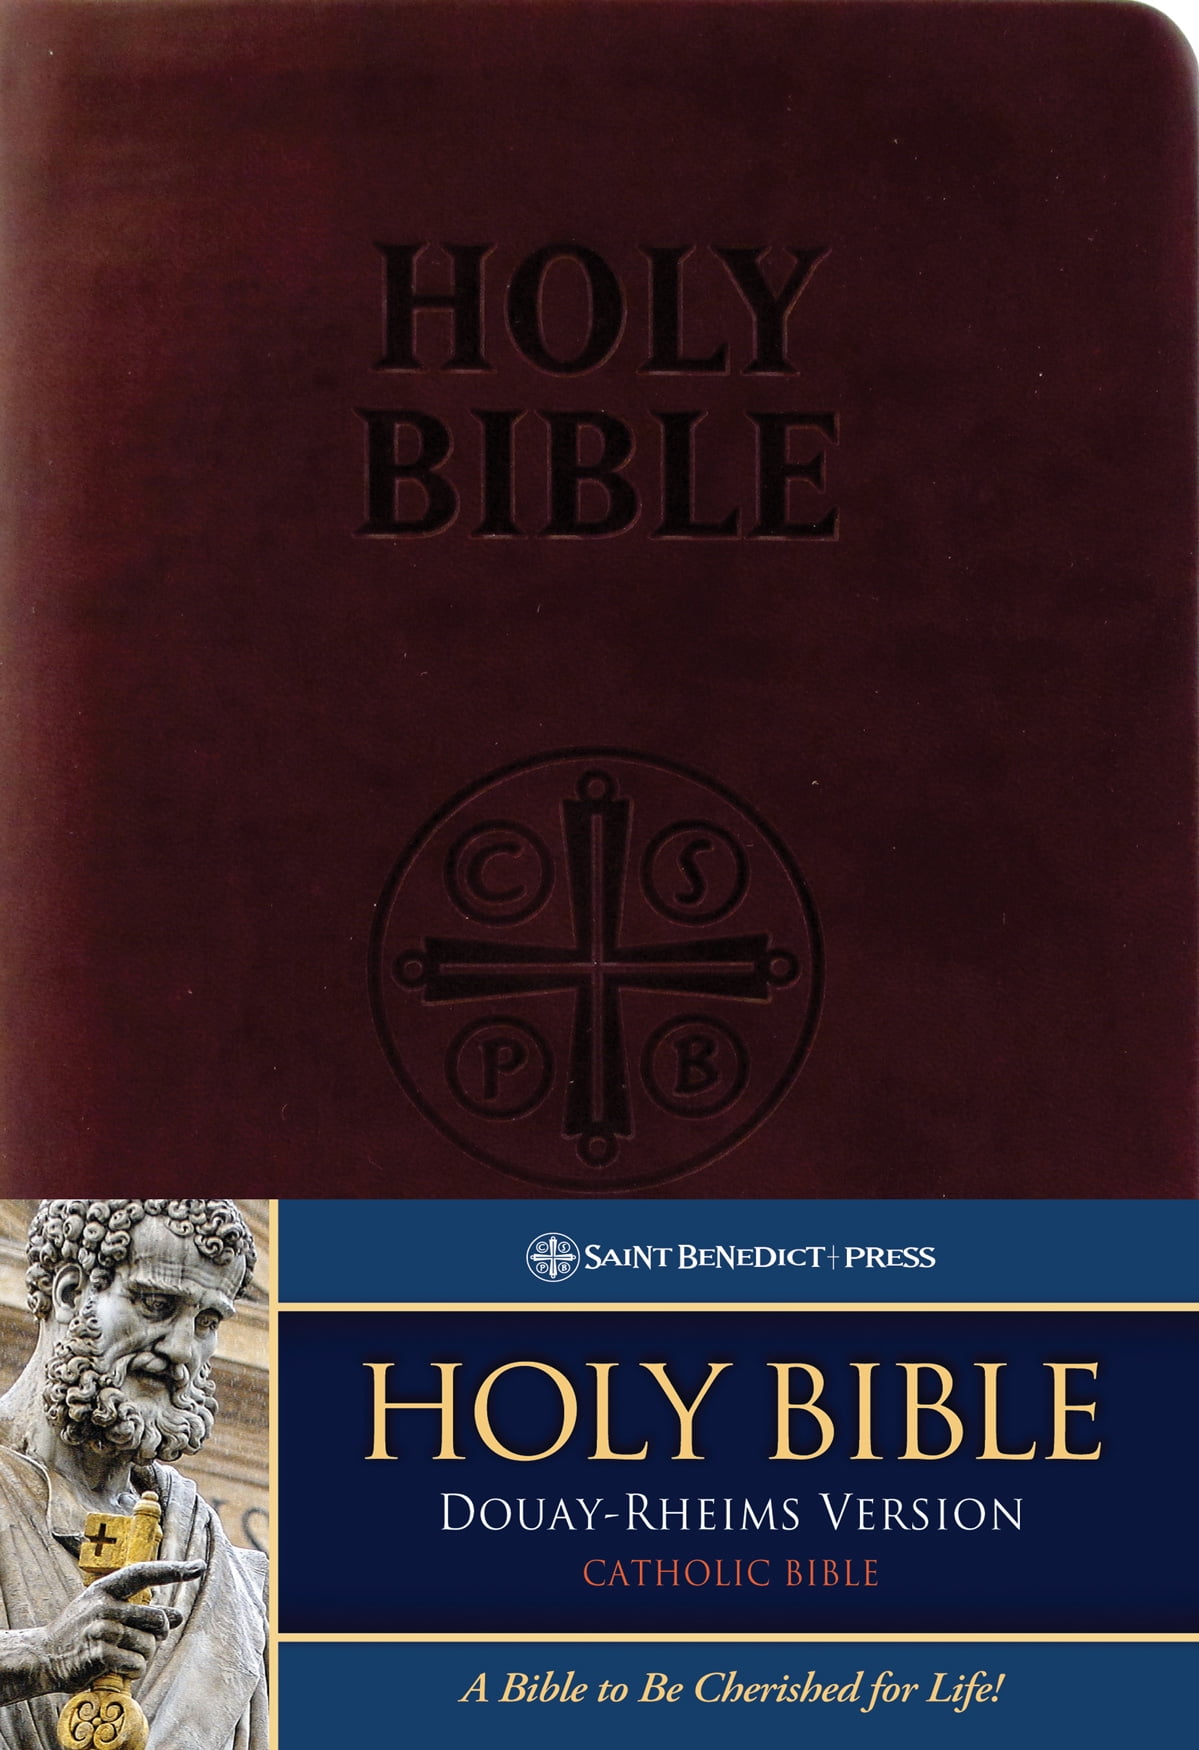 The Holy Bible, Douay-Rheims Version by Douay-Rheims